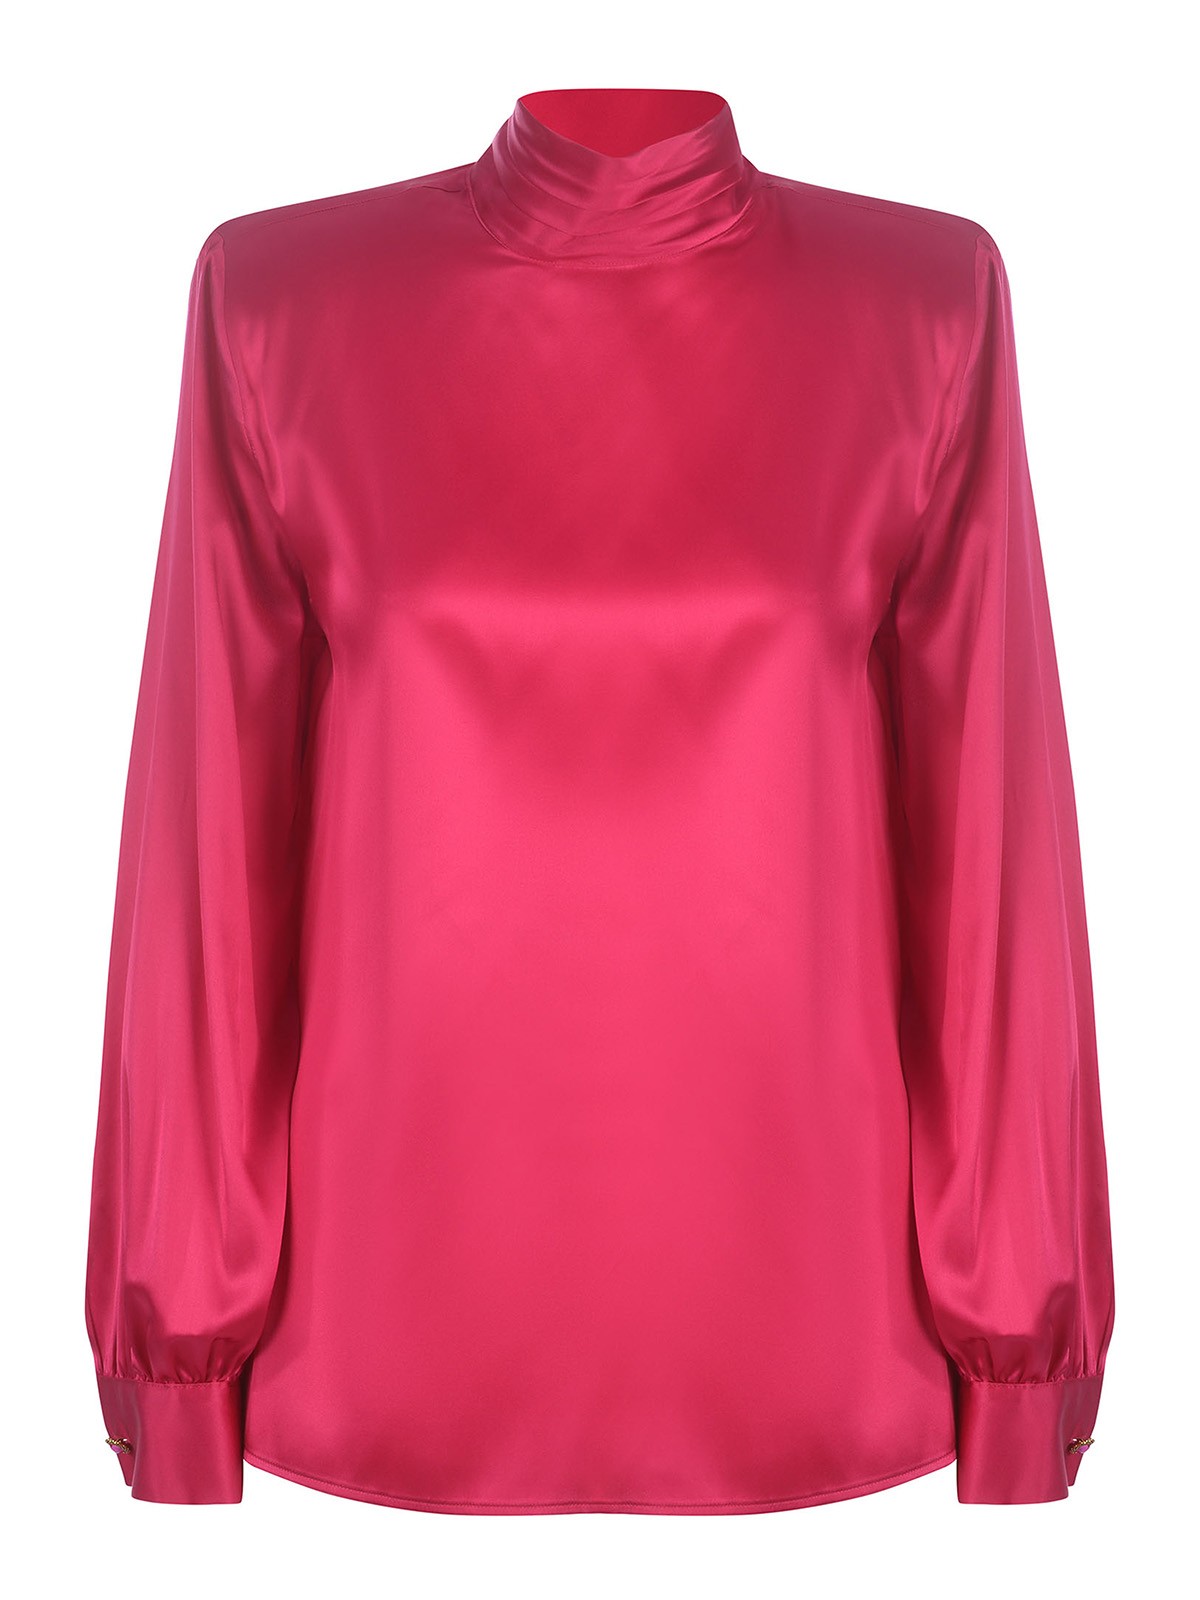 Blouses Pinko - Babi blouse - 1G188HZR64Q04 | Shop online at iKRIX